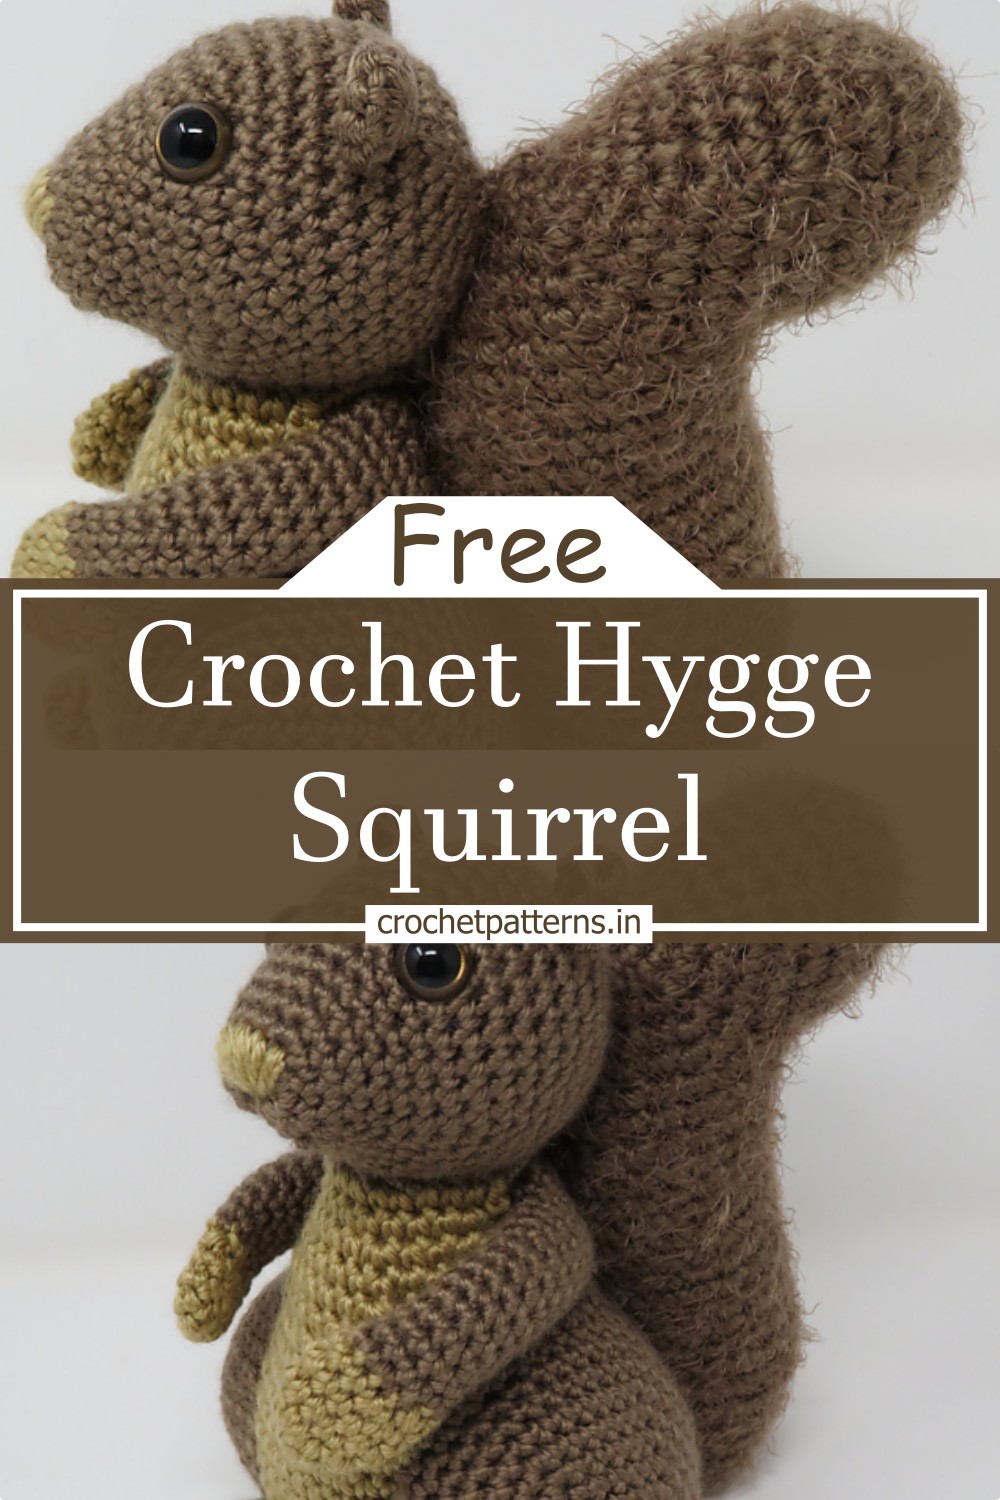 Crochet Hygge Squirrel